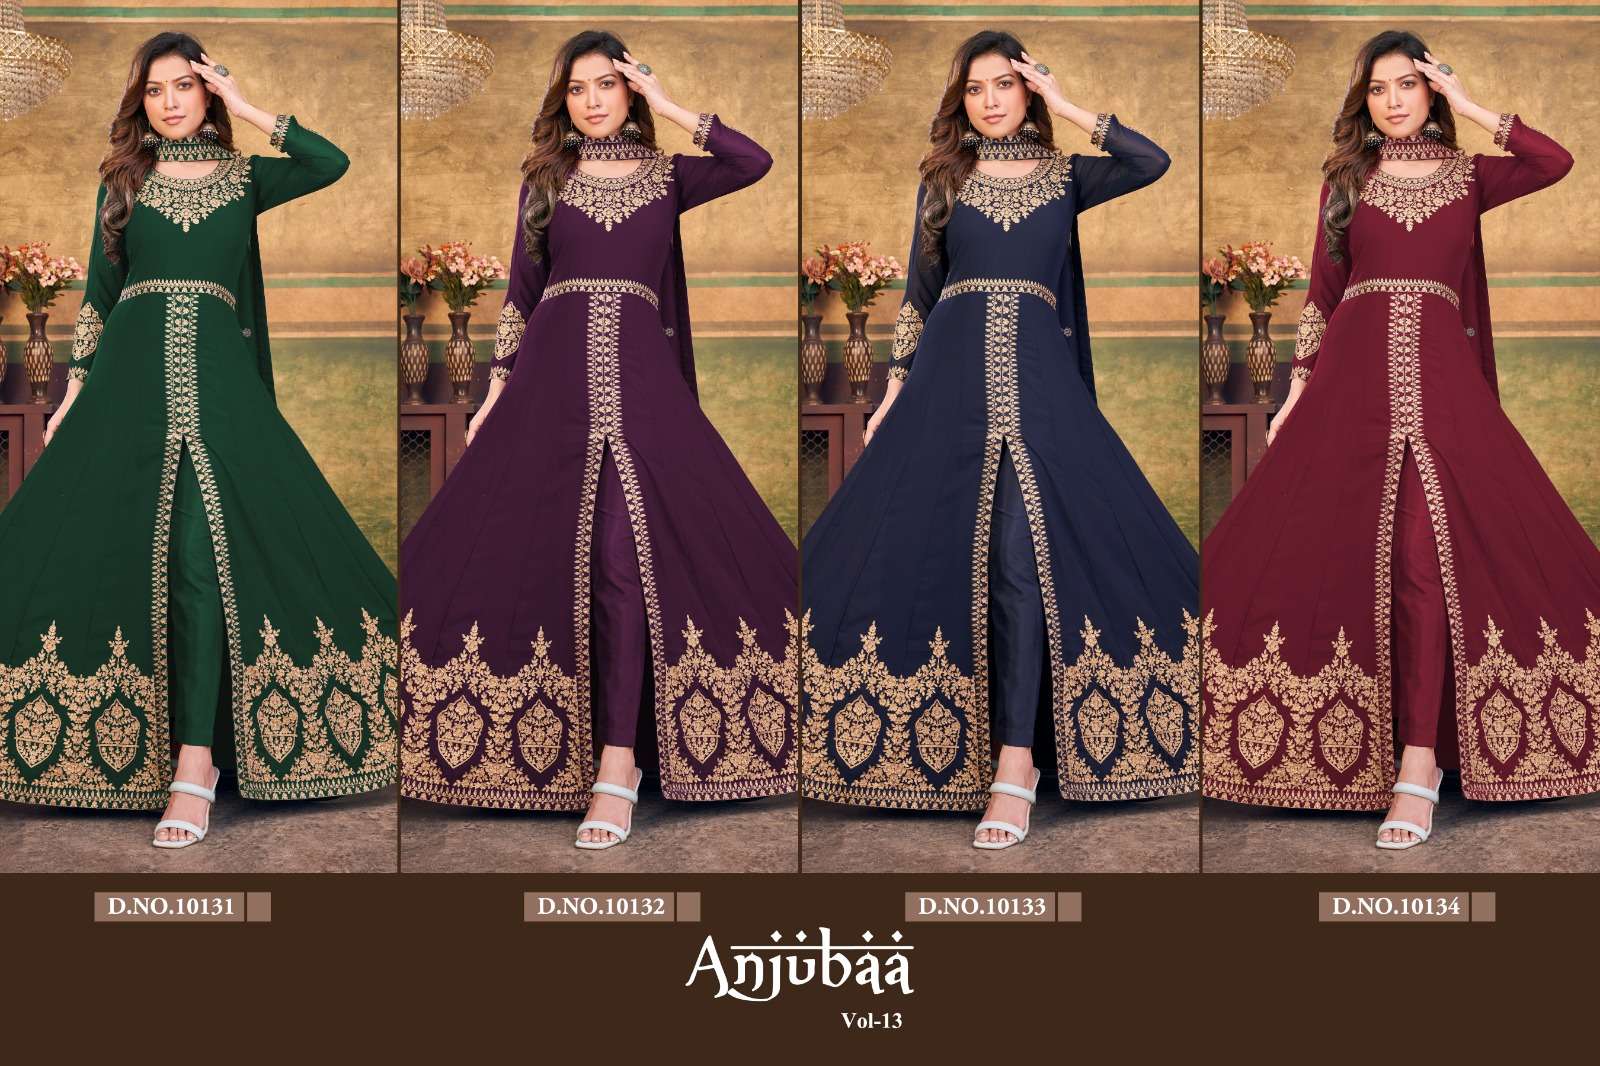 anjubaa anjubaa vol-13 10131-10134 series party wear dress catalogue wholesale price surat 